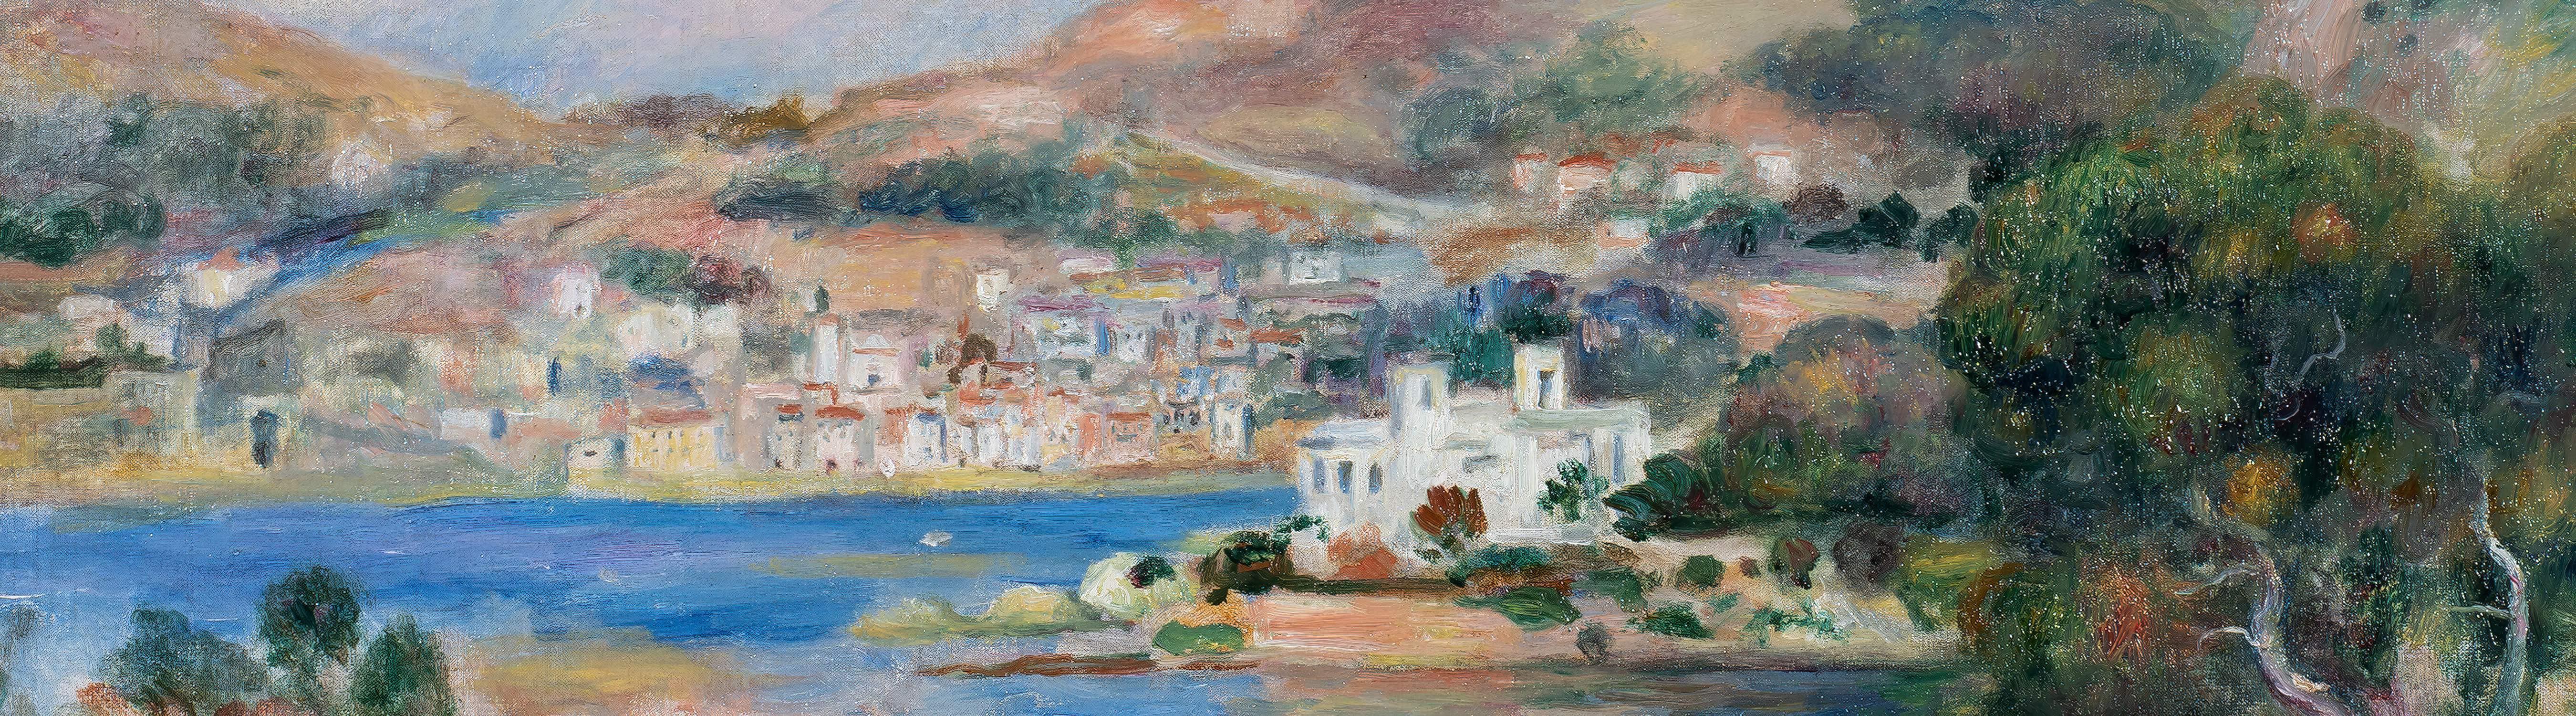 Celebrating 150 Years Of Impressionism | Stern Pissarro Gallery